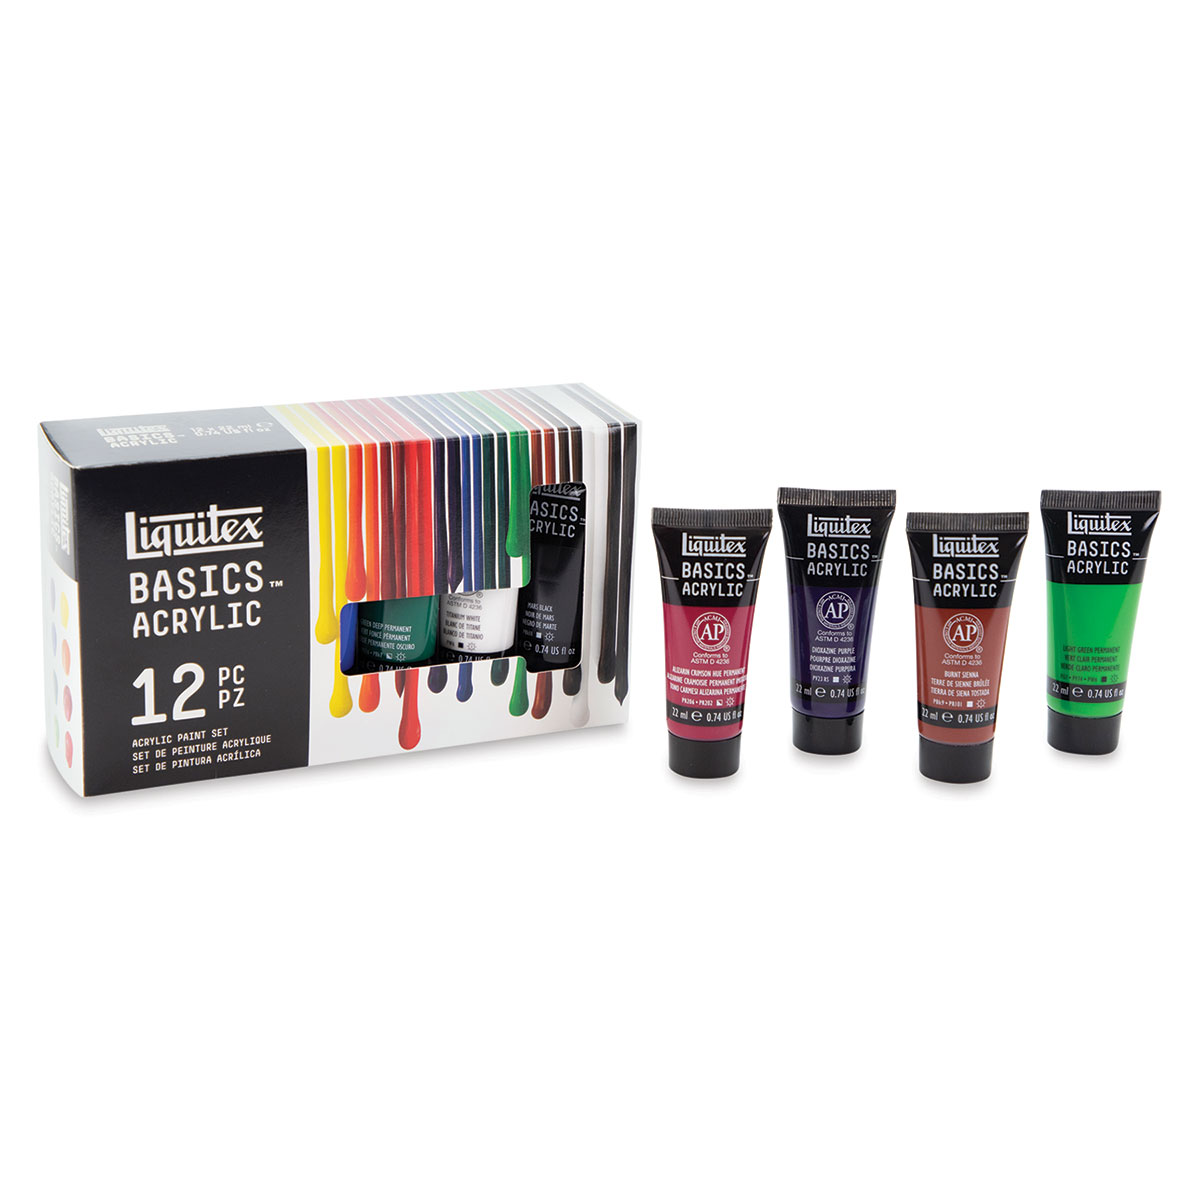 Liquitex Basics Acrylic Paint Set: 8 Colors